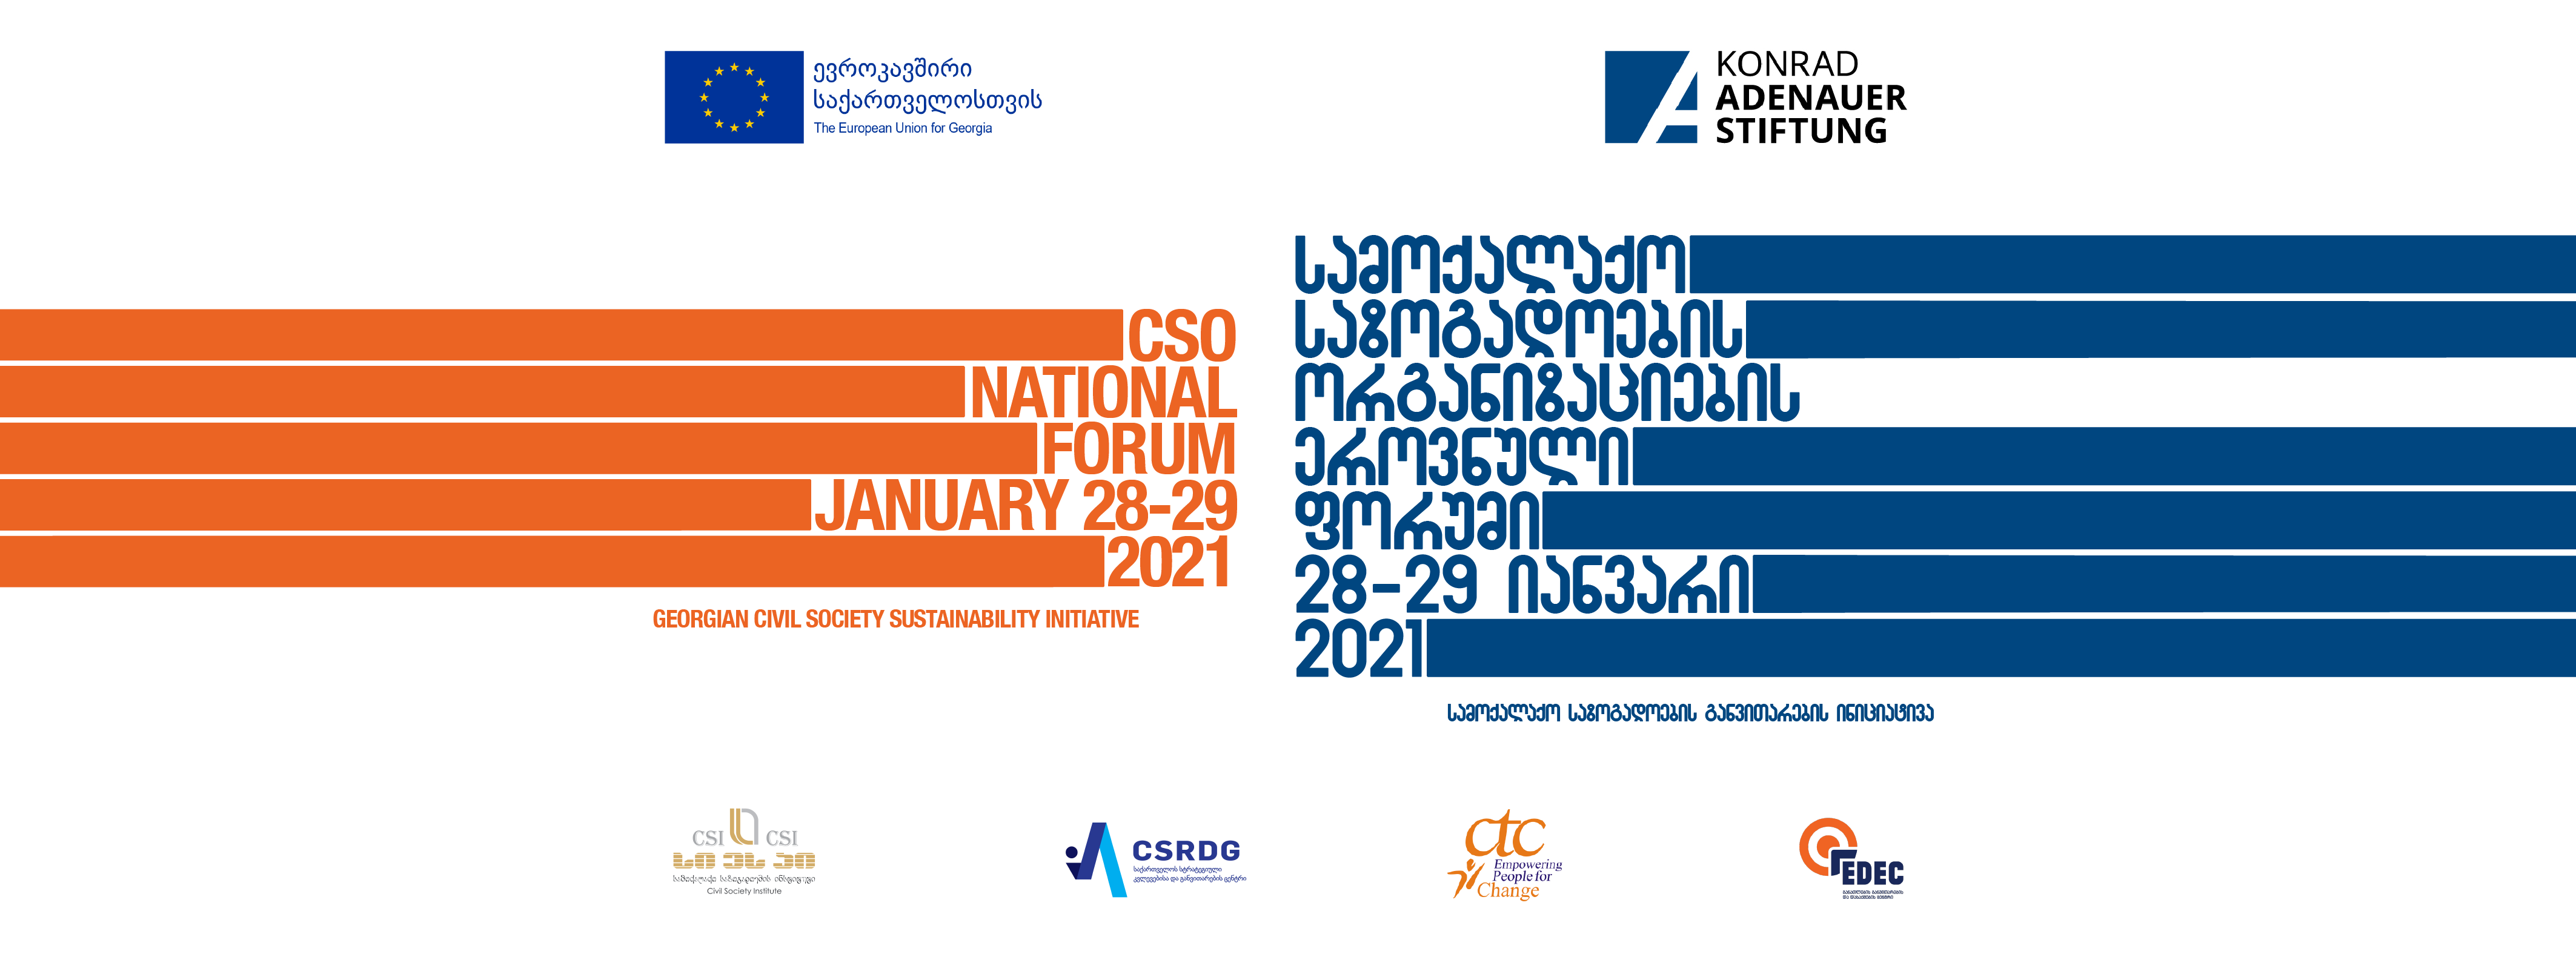 CSO National Forum